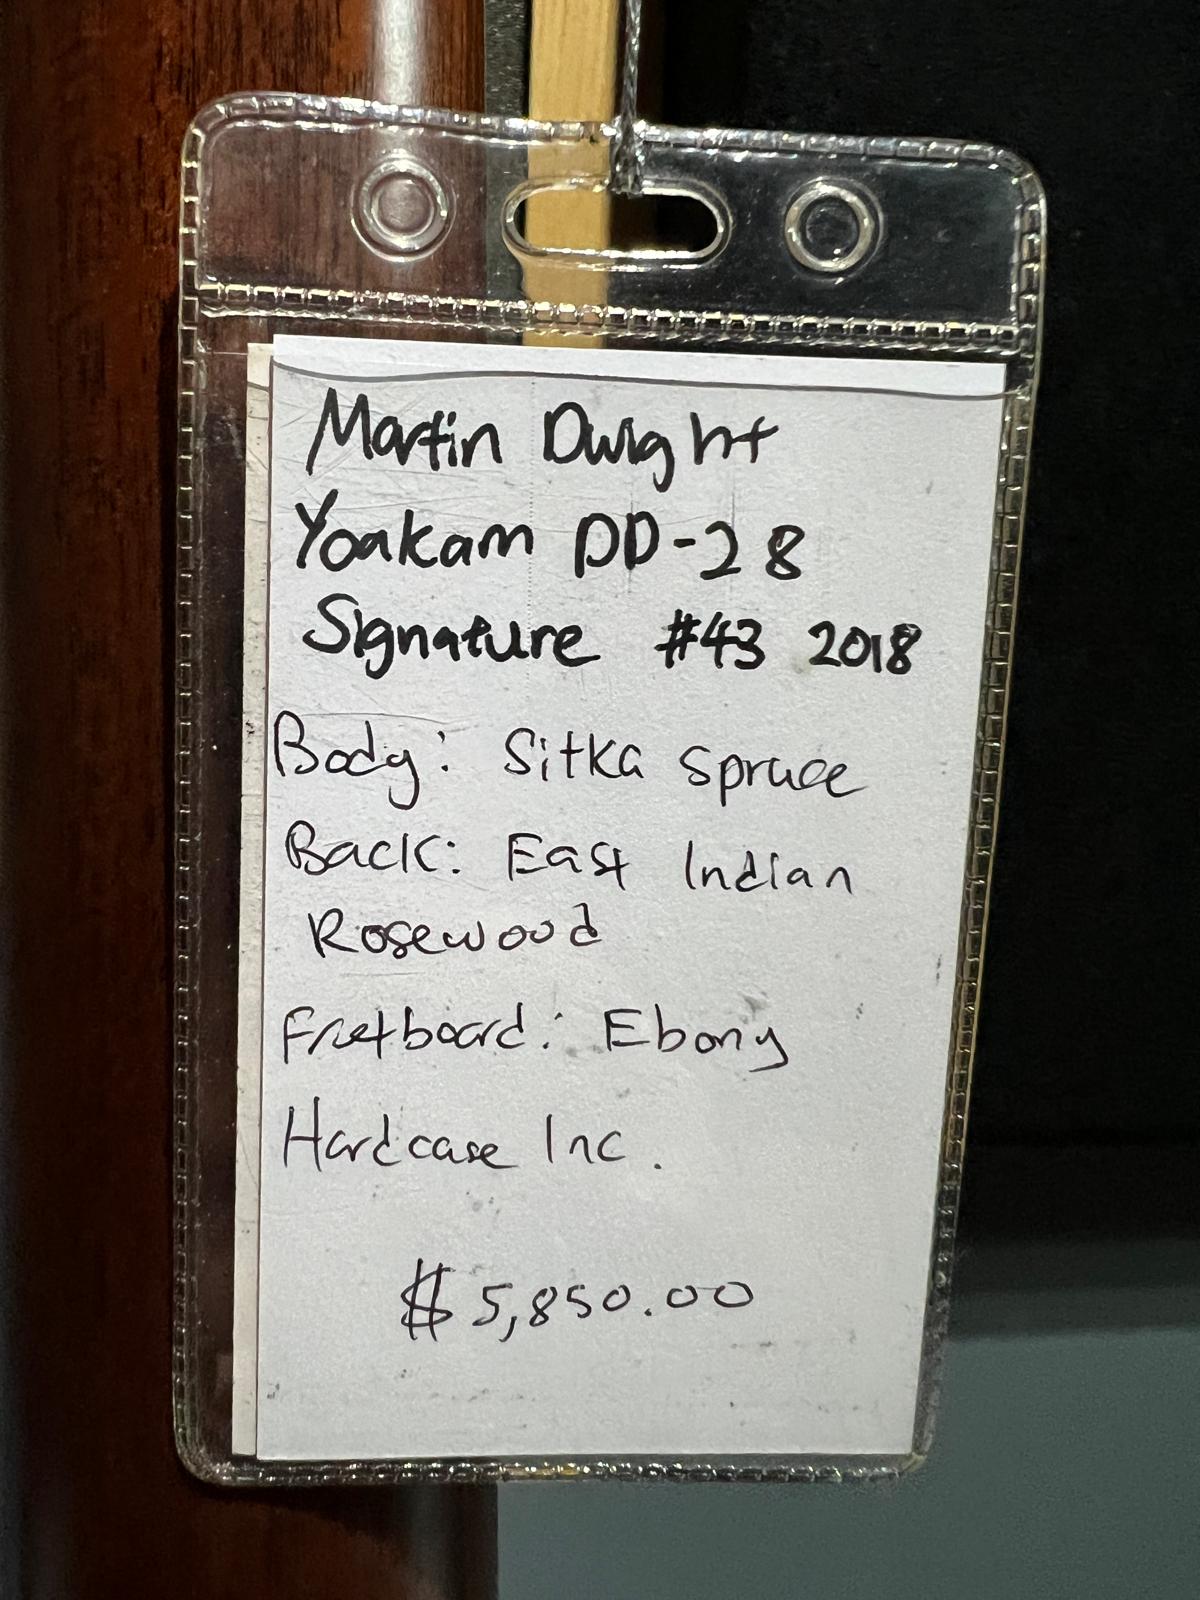 Martin Dwight Yoakam DD-28 Signature #43 2018